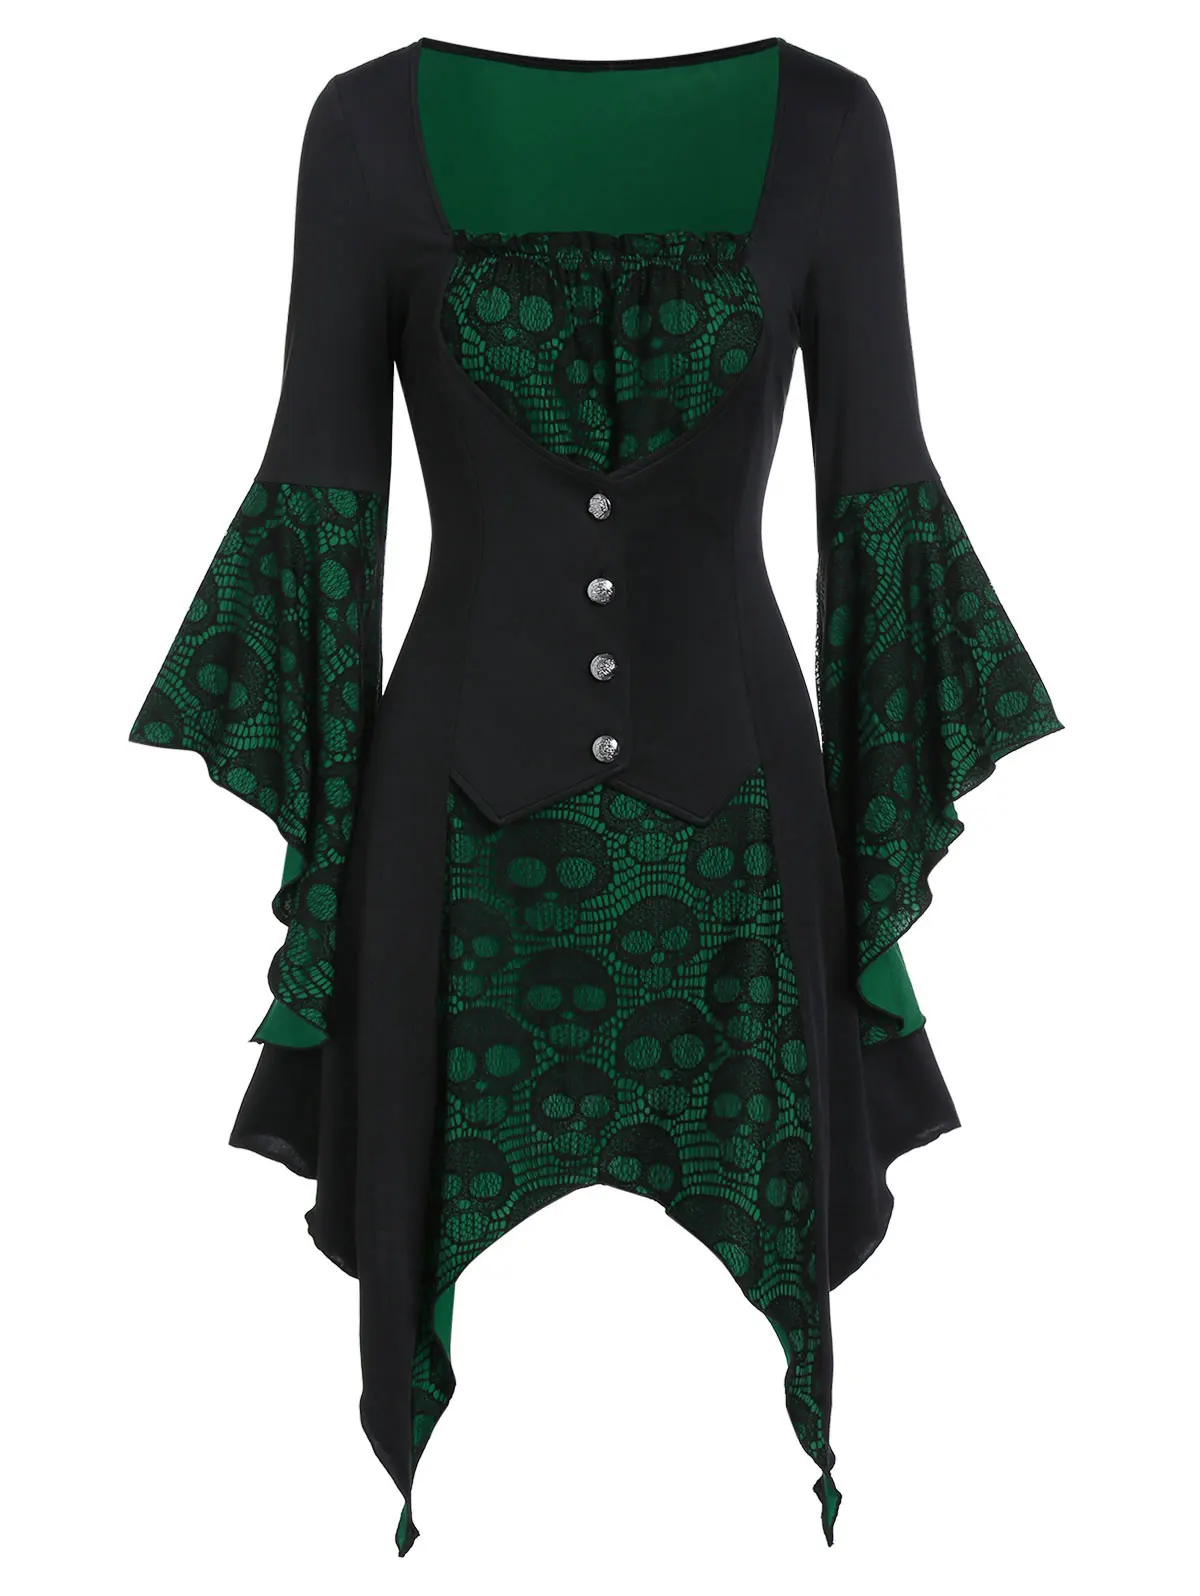  ROSEGAL Halloween Dress Women Vintage Gothic Skull Lace Insert Poet Sleeve Square Neck Button Ruffl